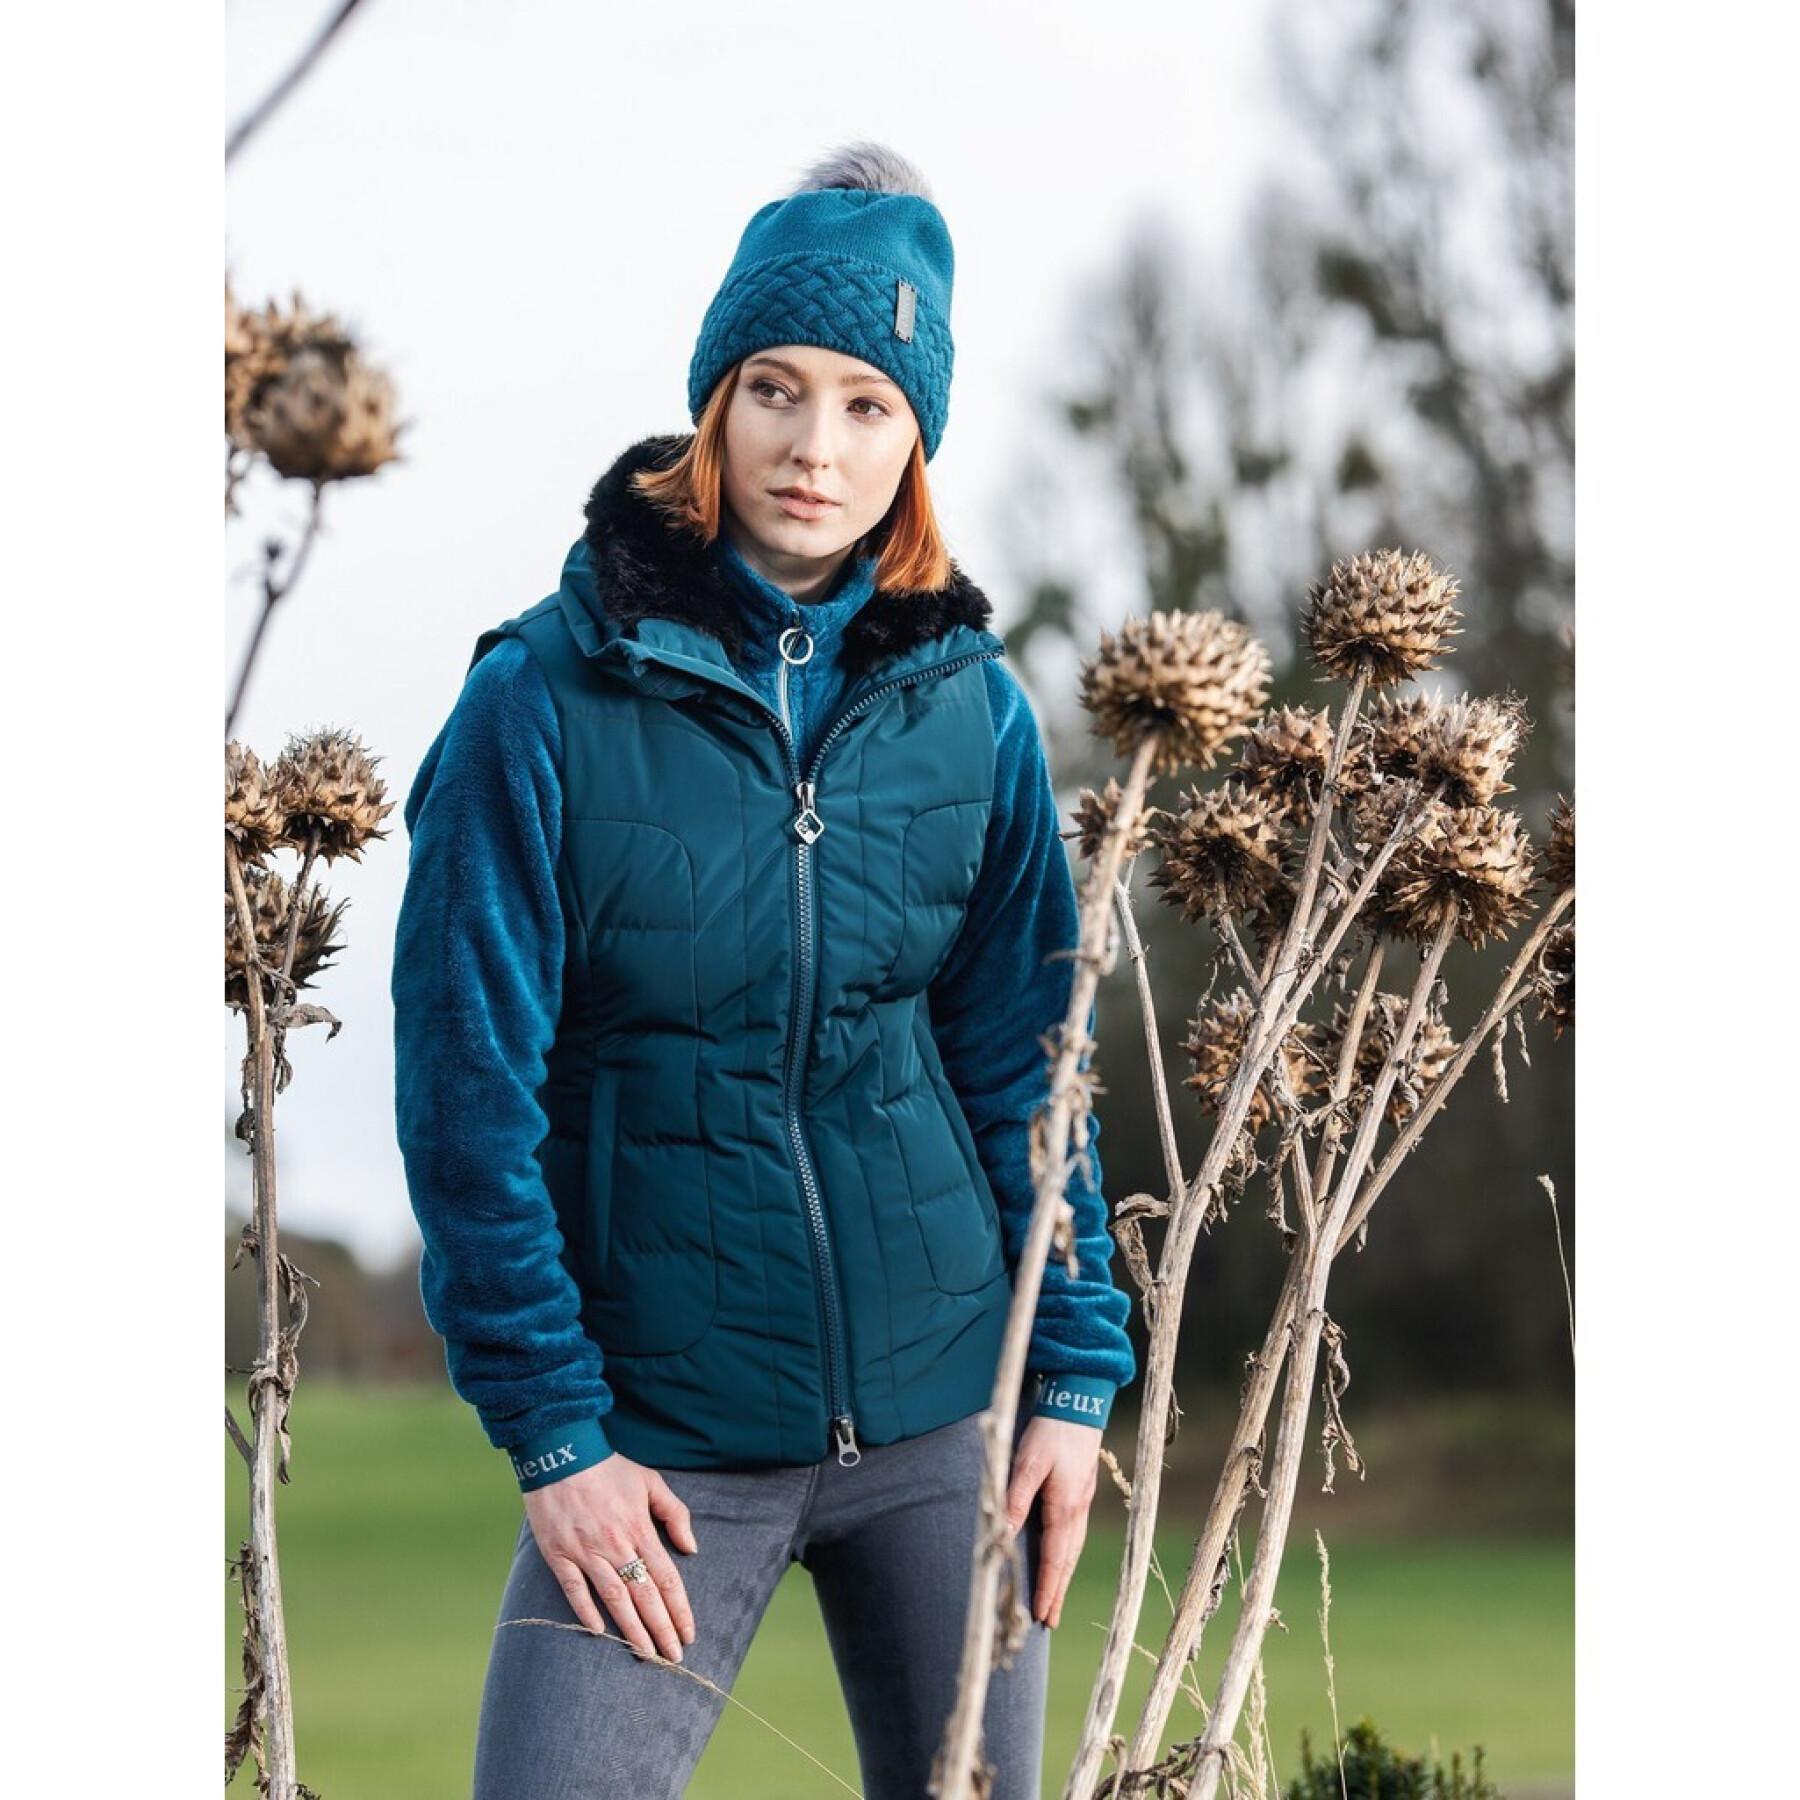 Sleeveless winter jacket for women LeMieux Loire